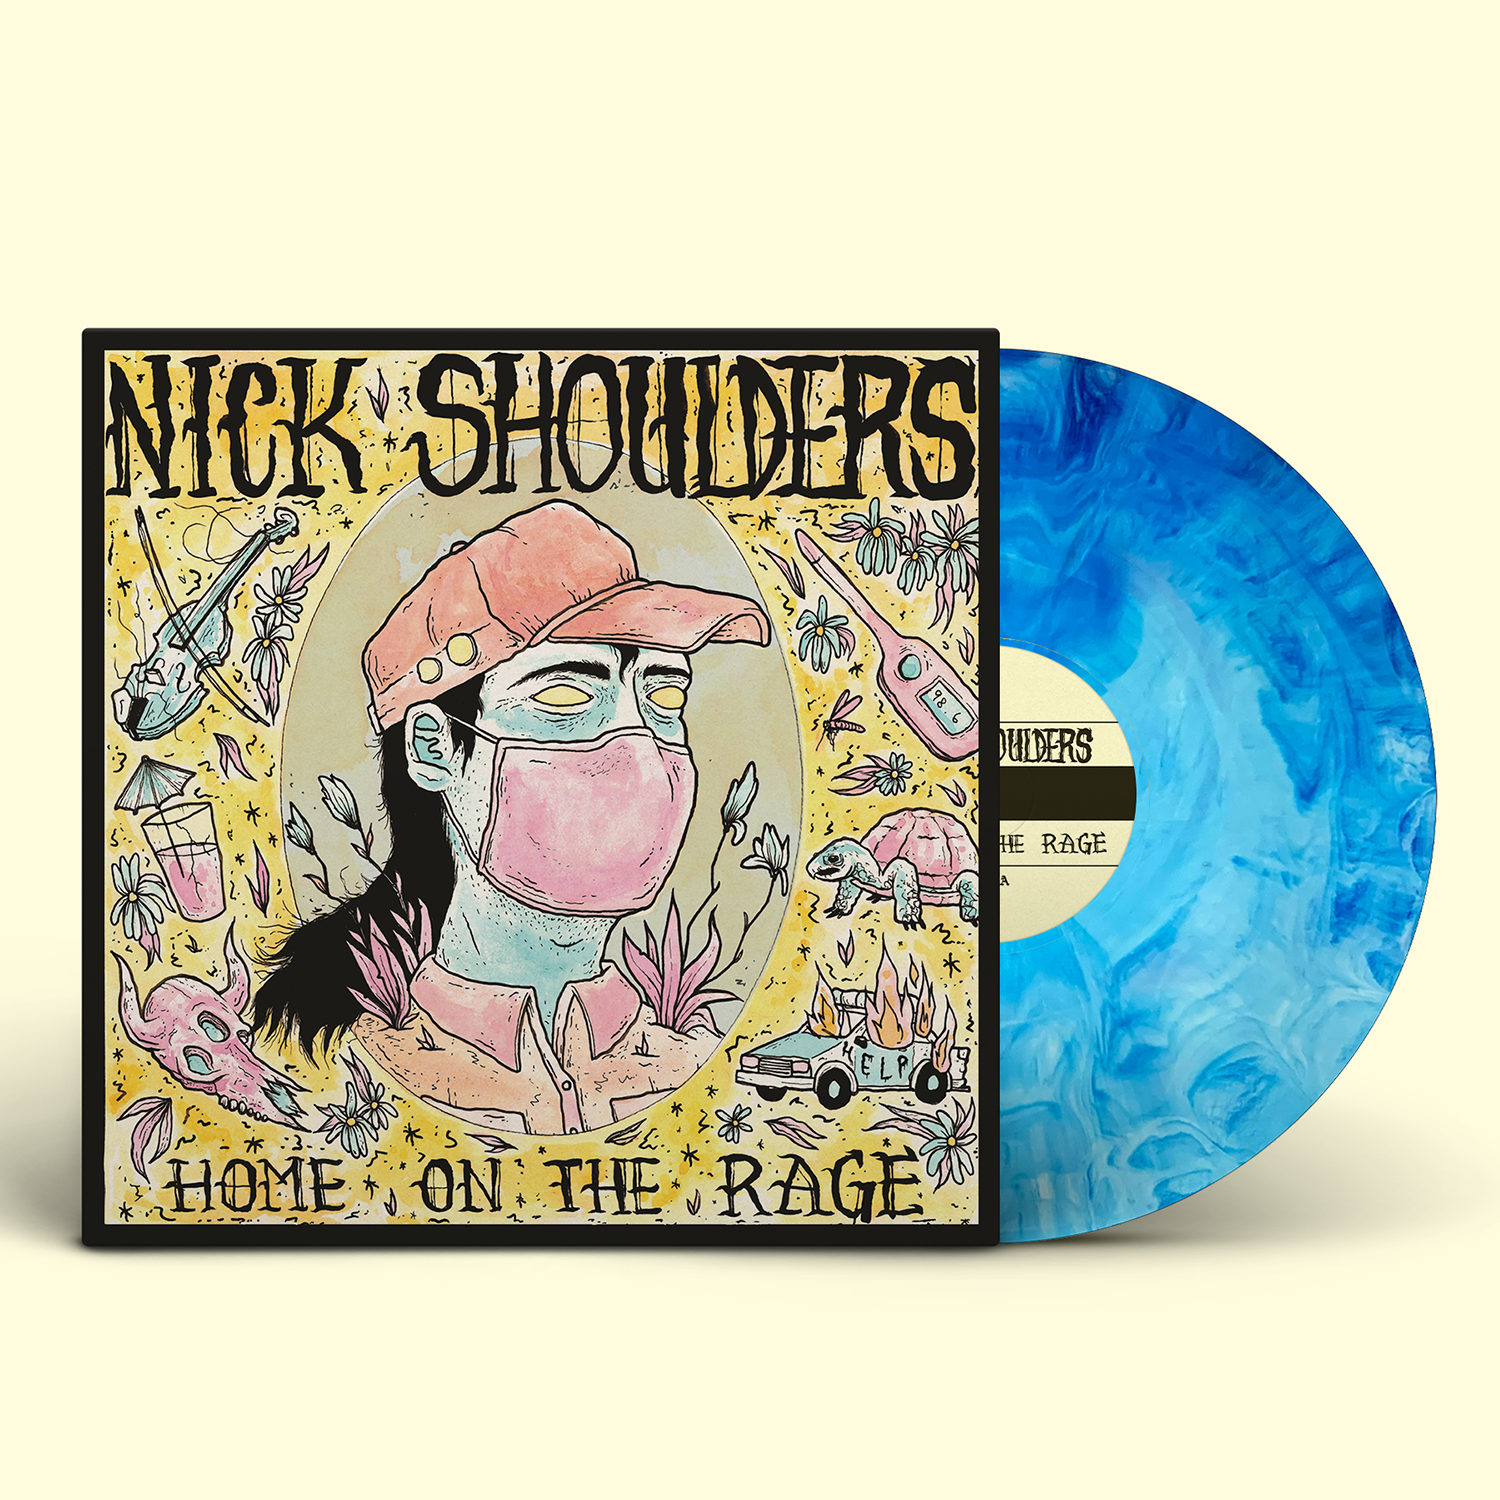 Nick Shoulders - "Home on the Rage" 150g Blue Marble Vinyl